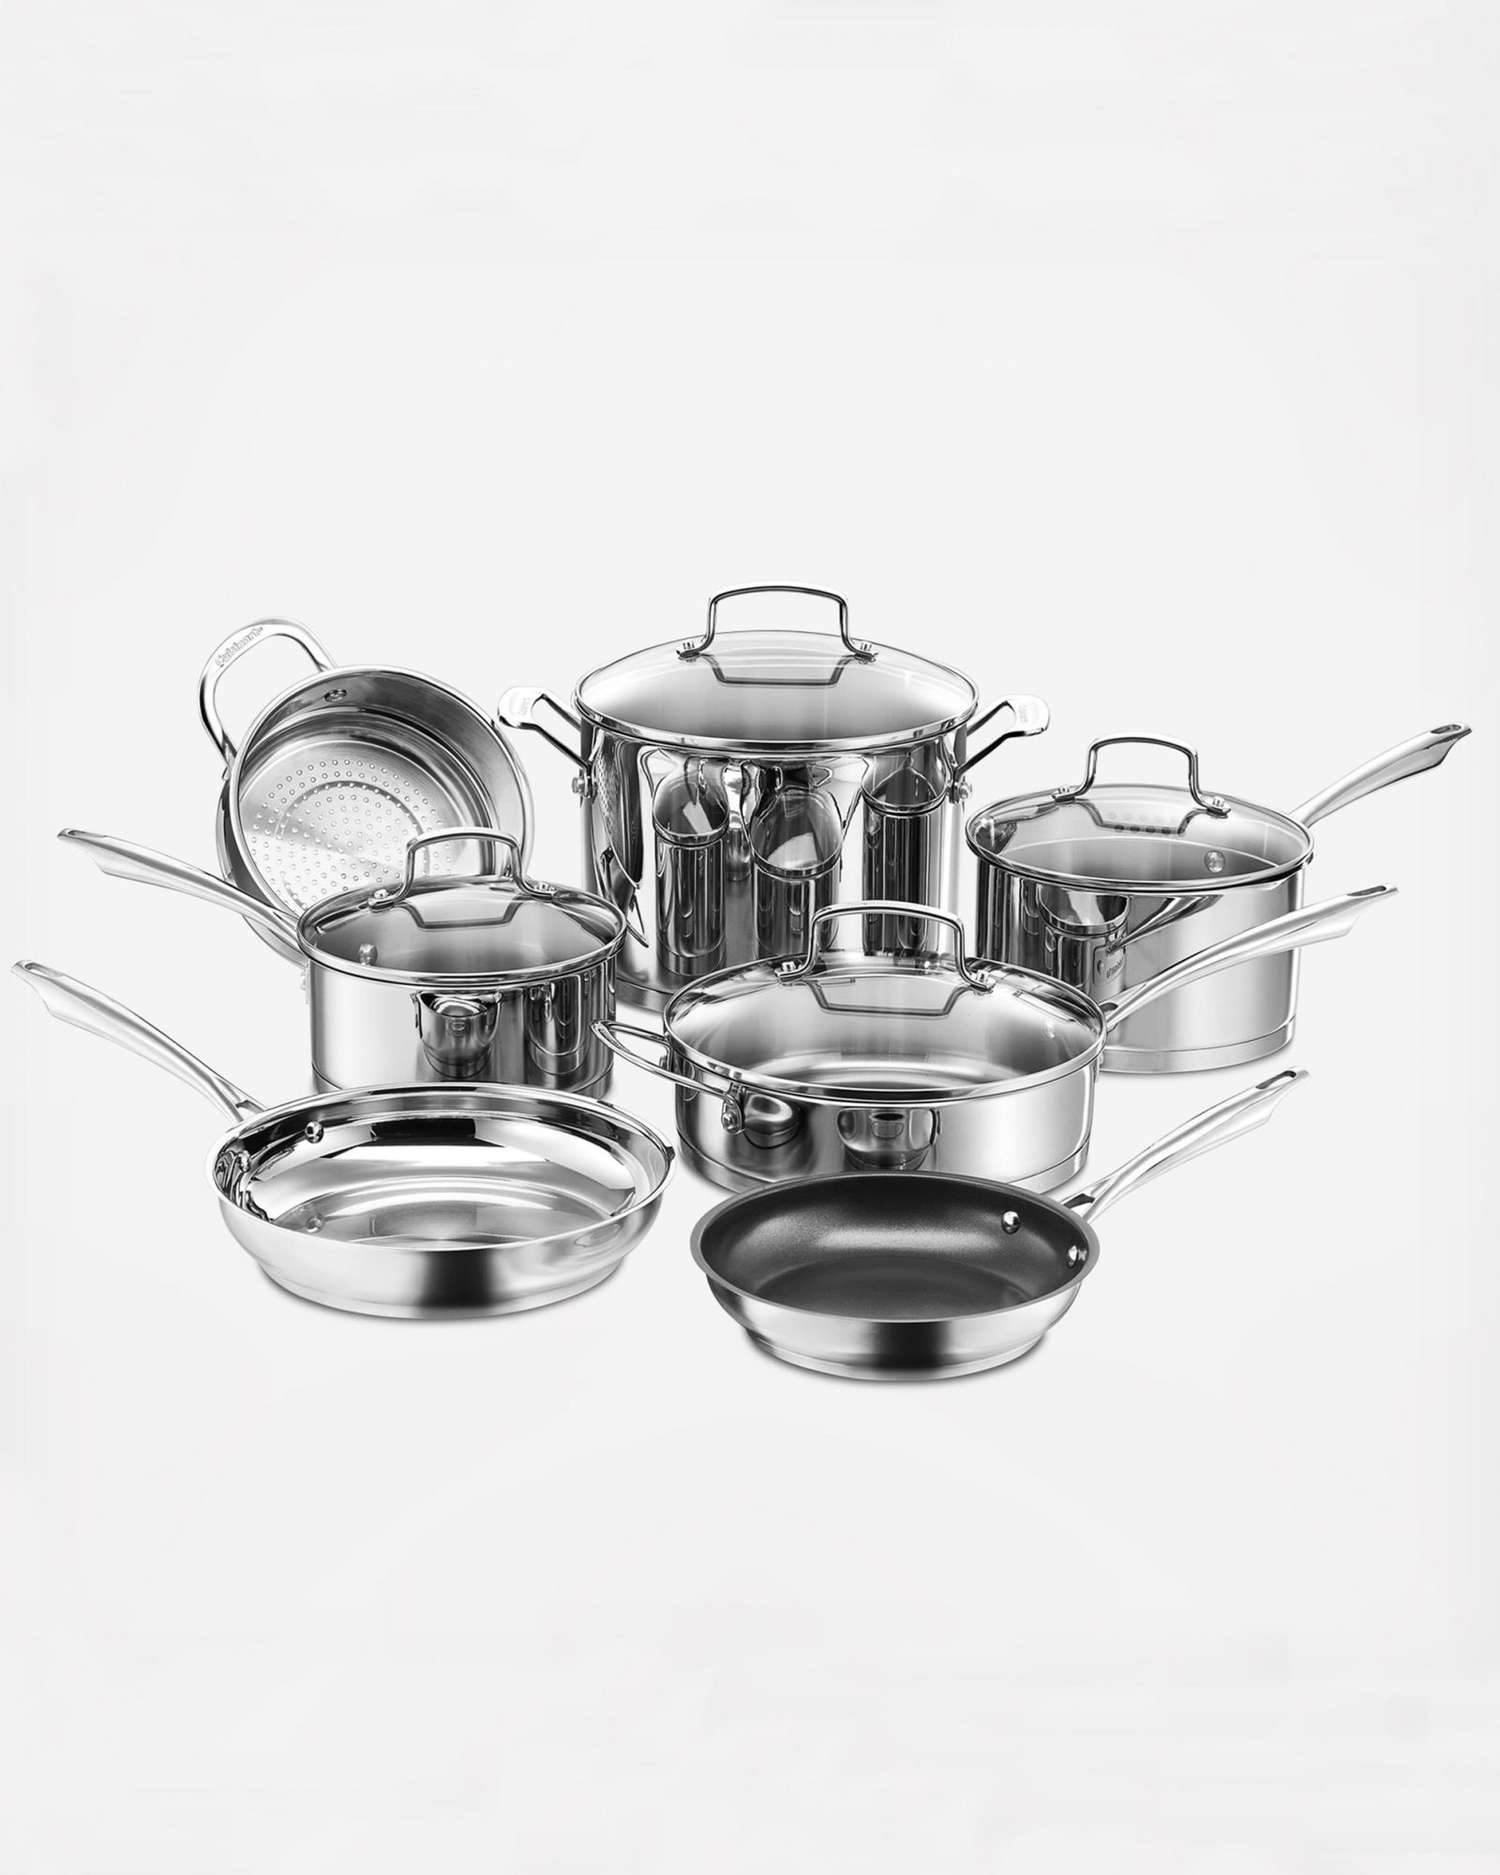 registry-gifts-budget-zola-cuisinart-cookware-set-0615